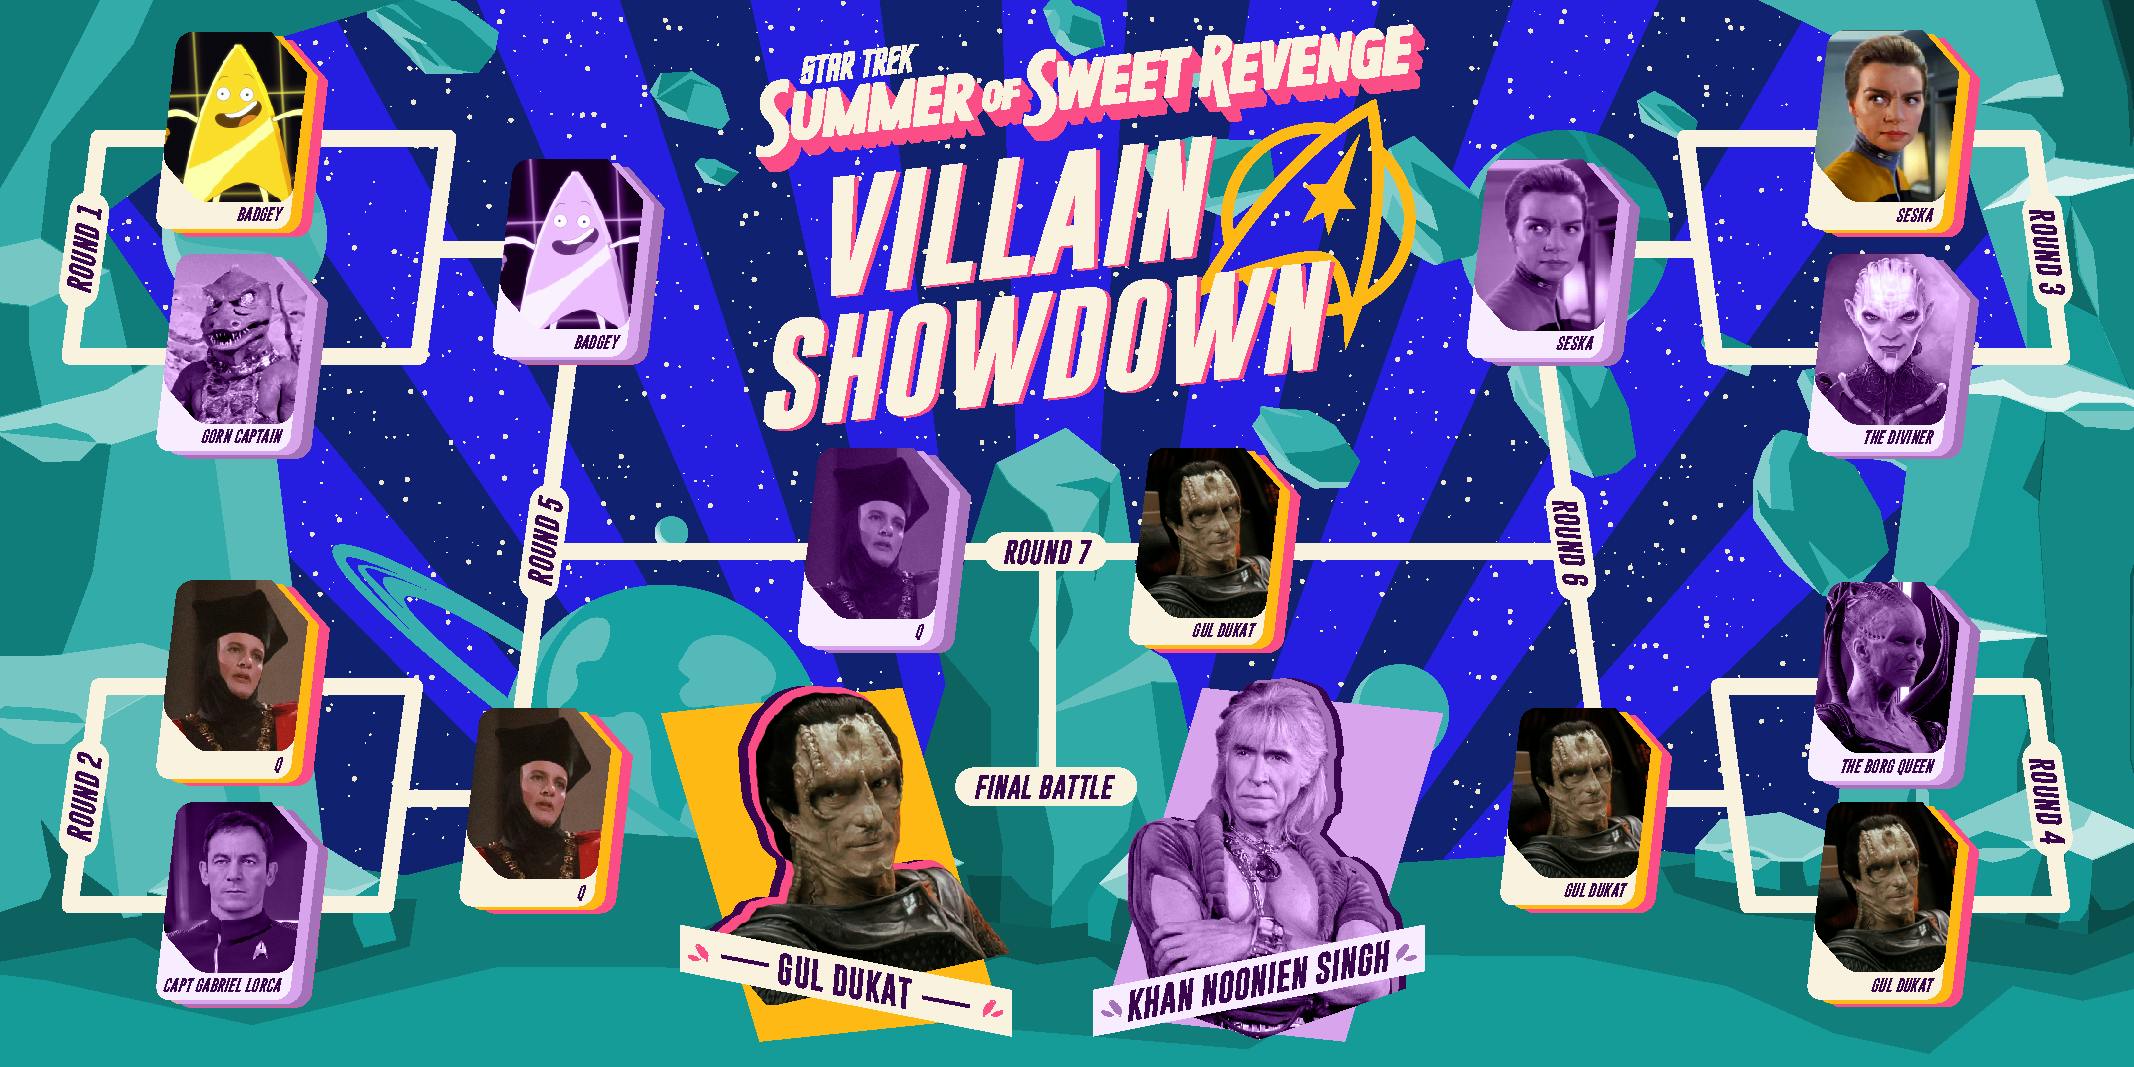 The Villain Showdown illustrated graphic